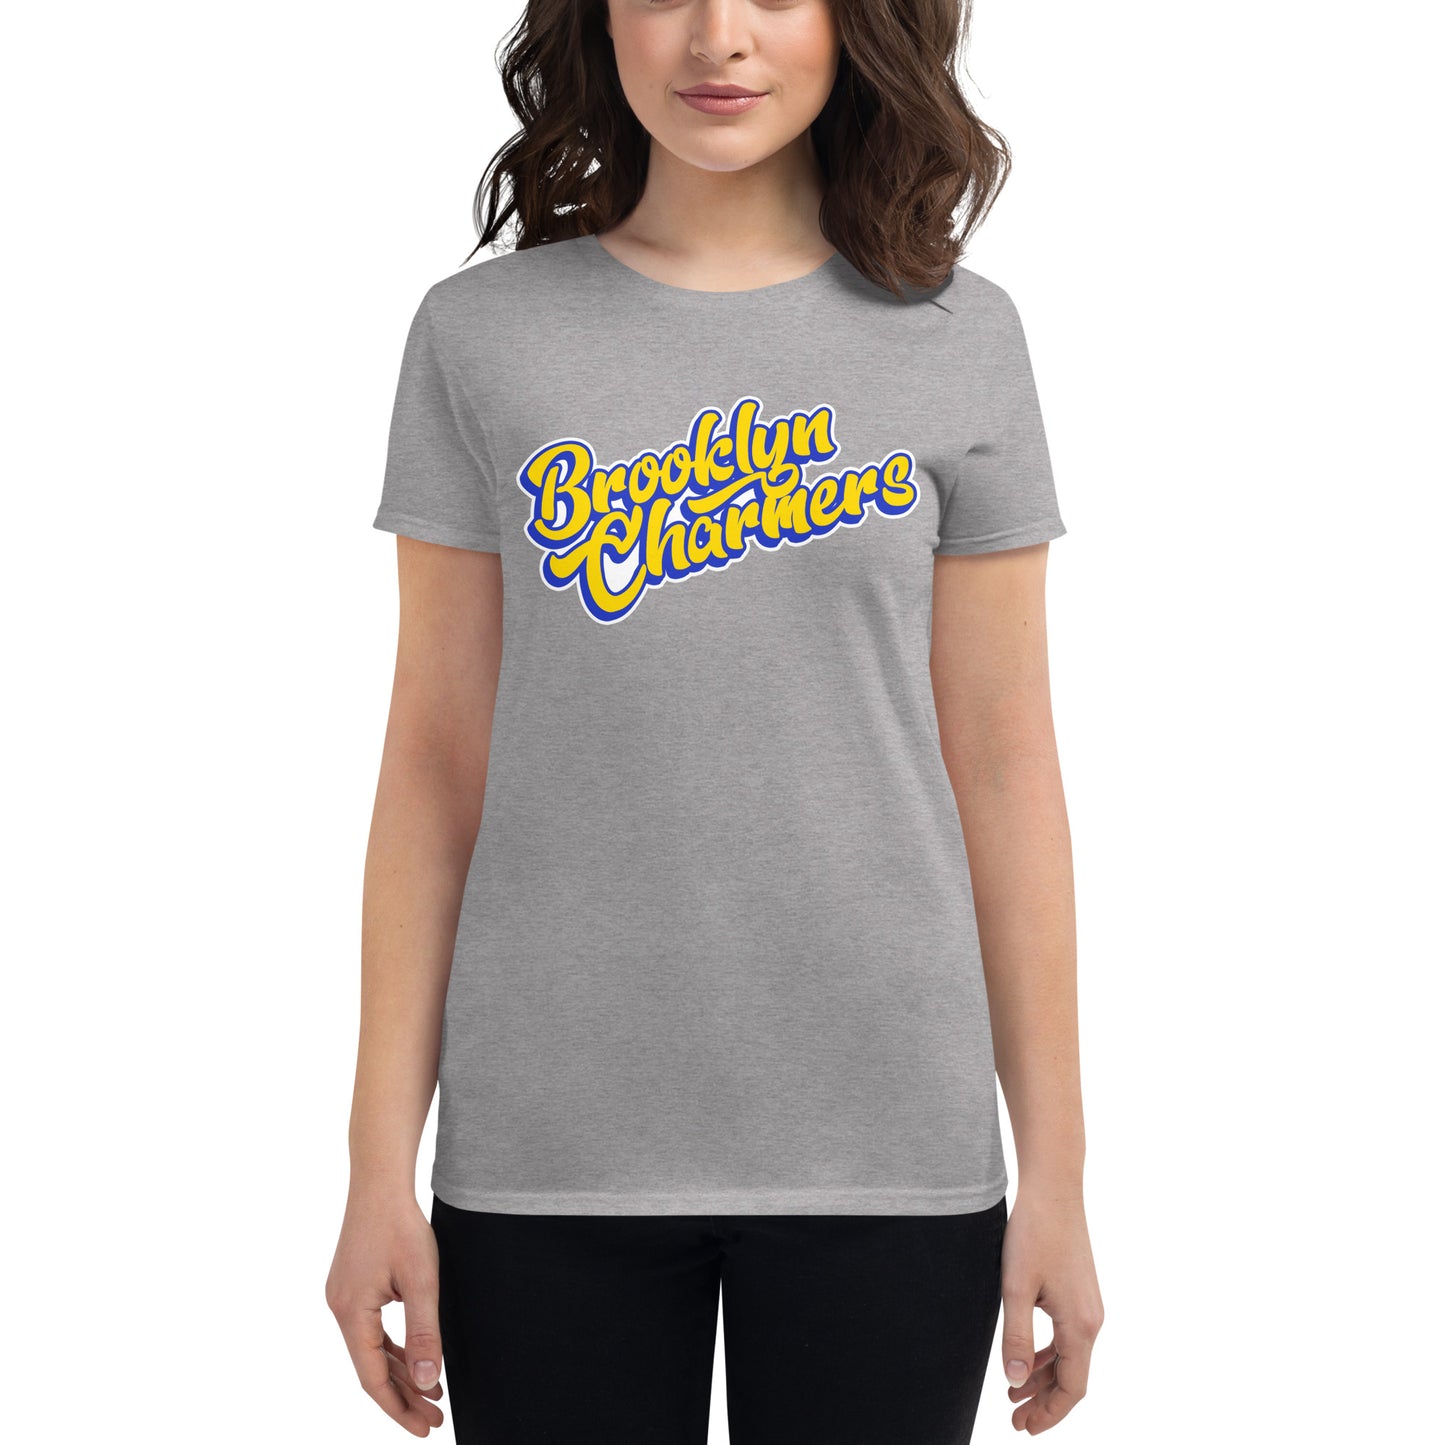 Brooklyn Charmers "THRILL" Women's T-Shirt